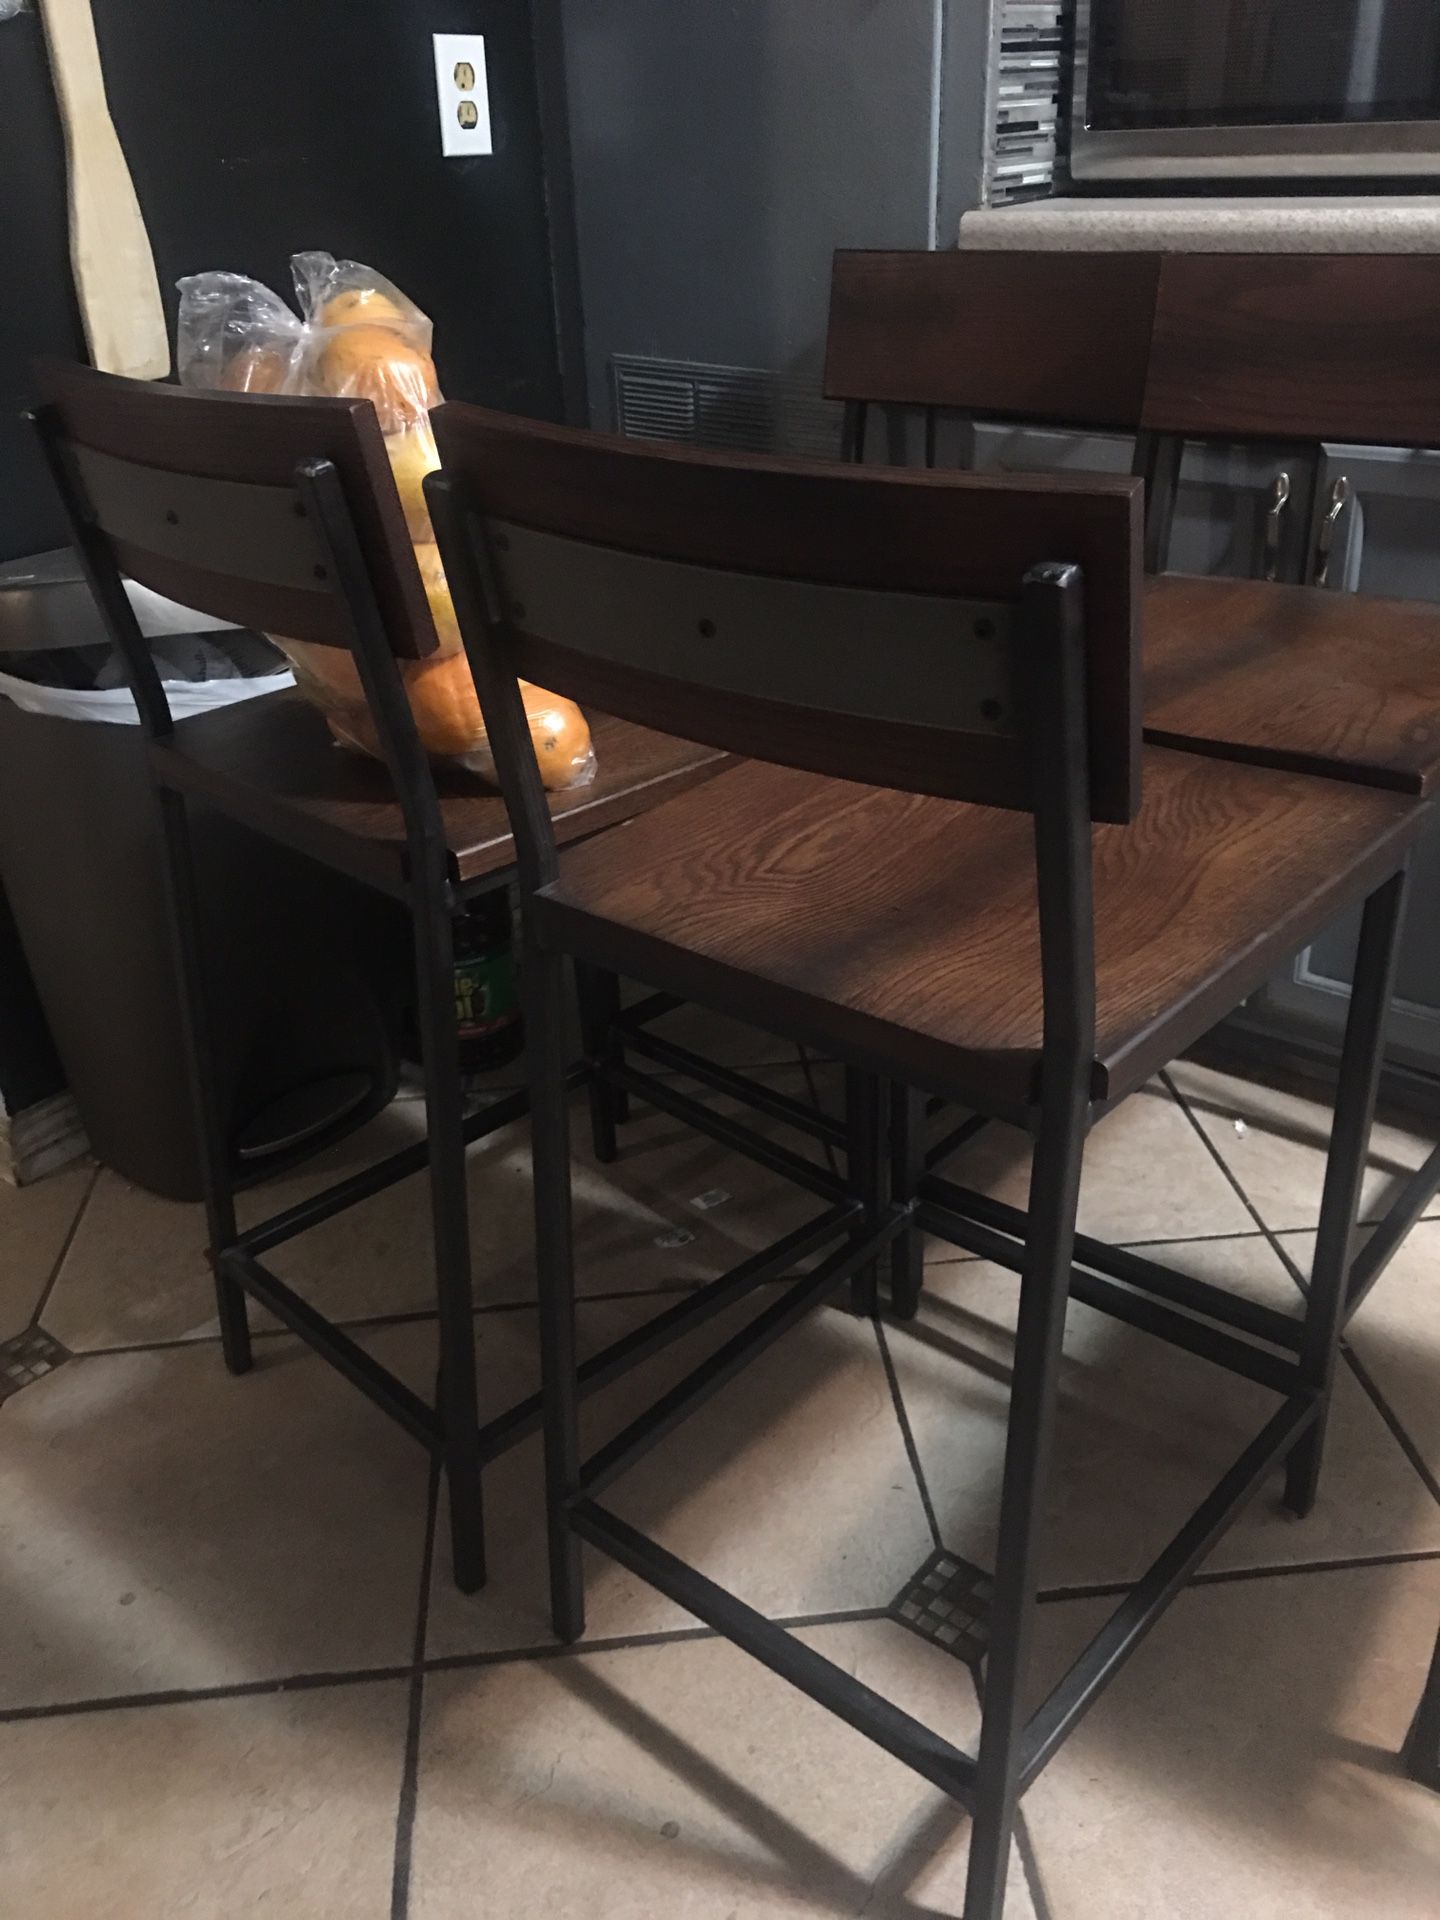 Chairs / Bar stools